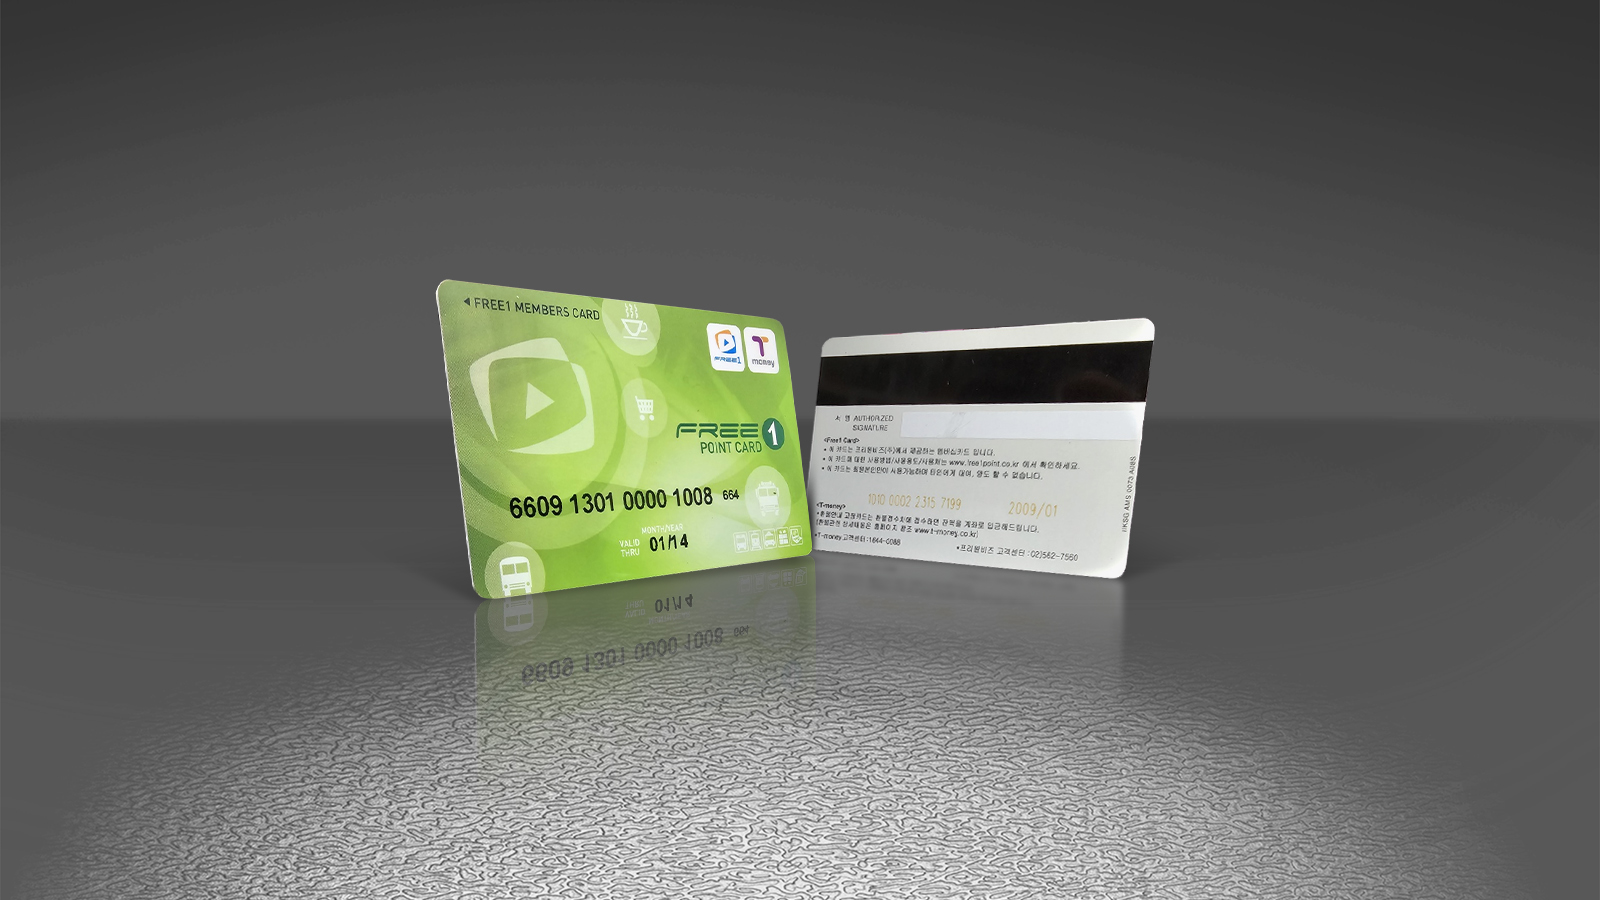 Gyeonggi-do Prepaid Traffic Card Design Agency - ADDVALUN with Free One Co,.Ltd.